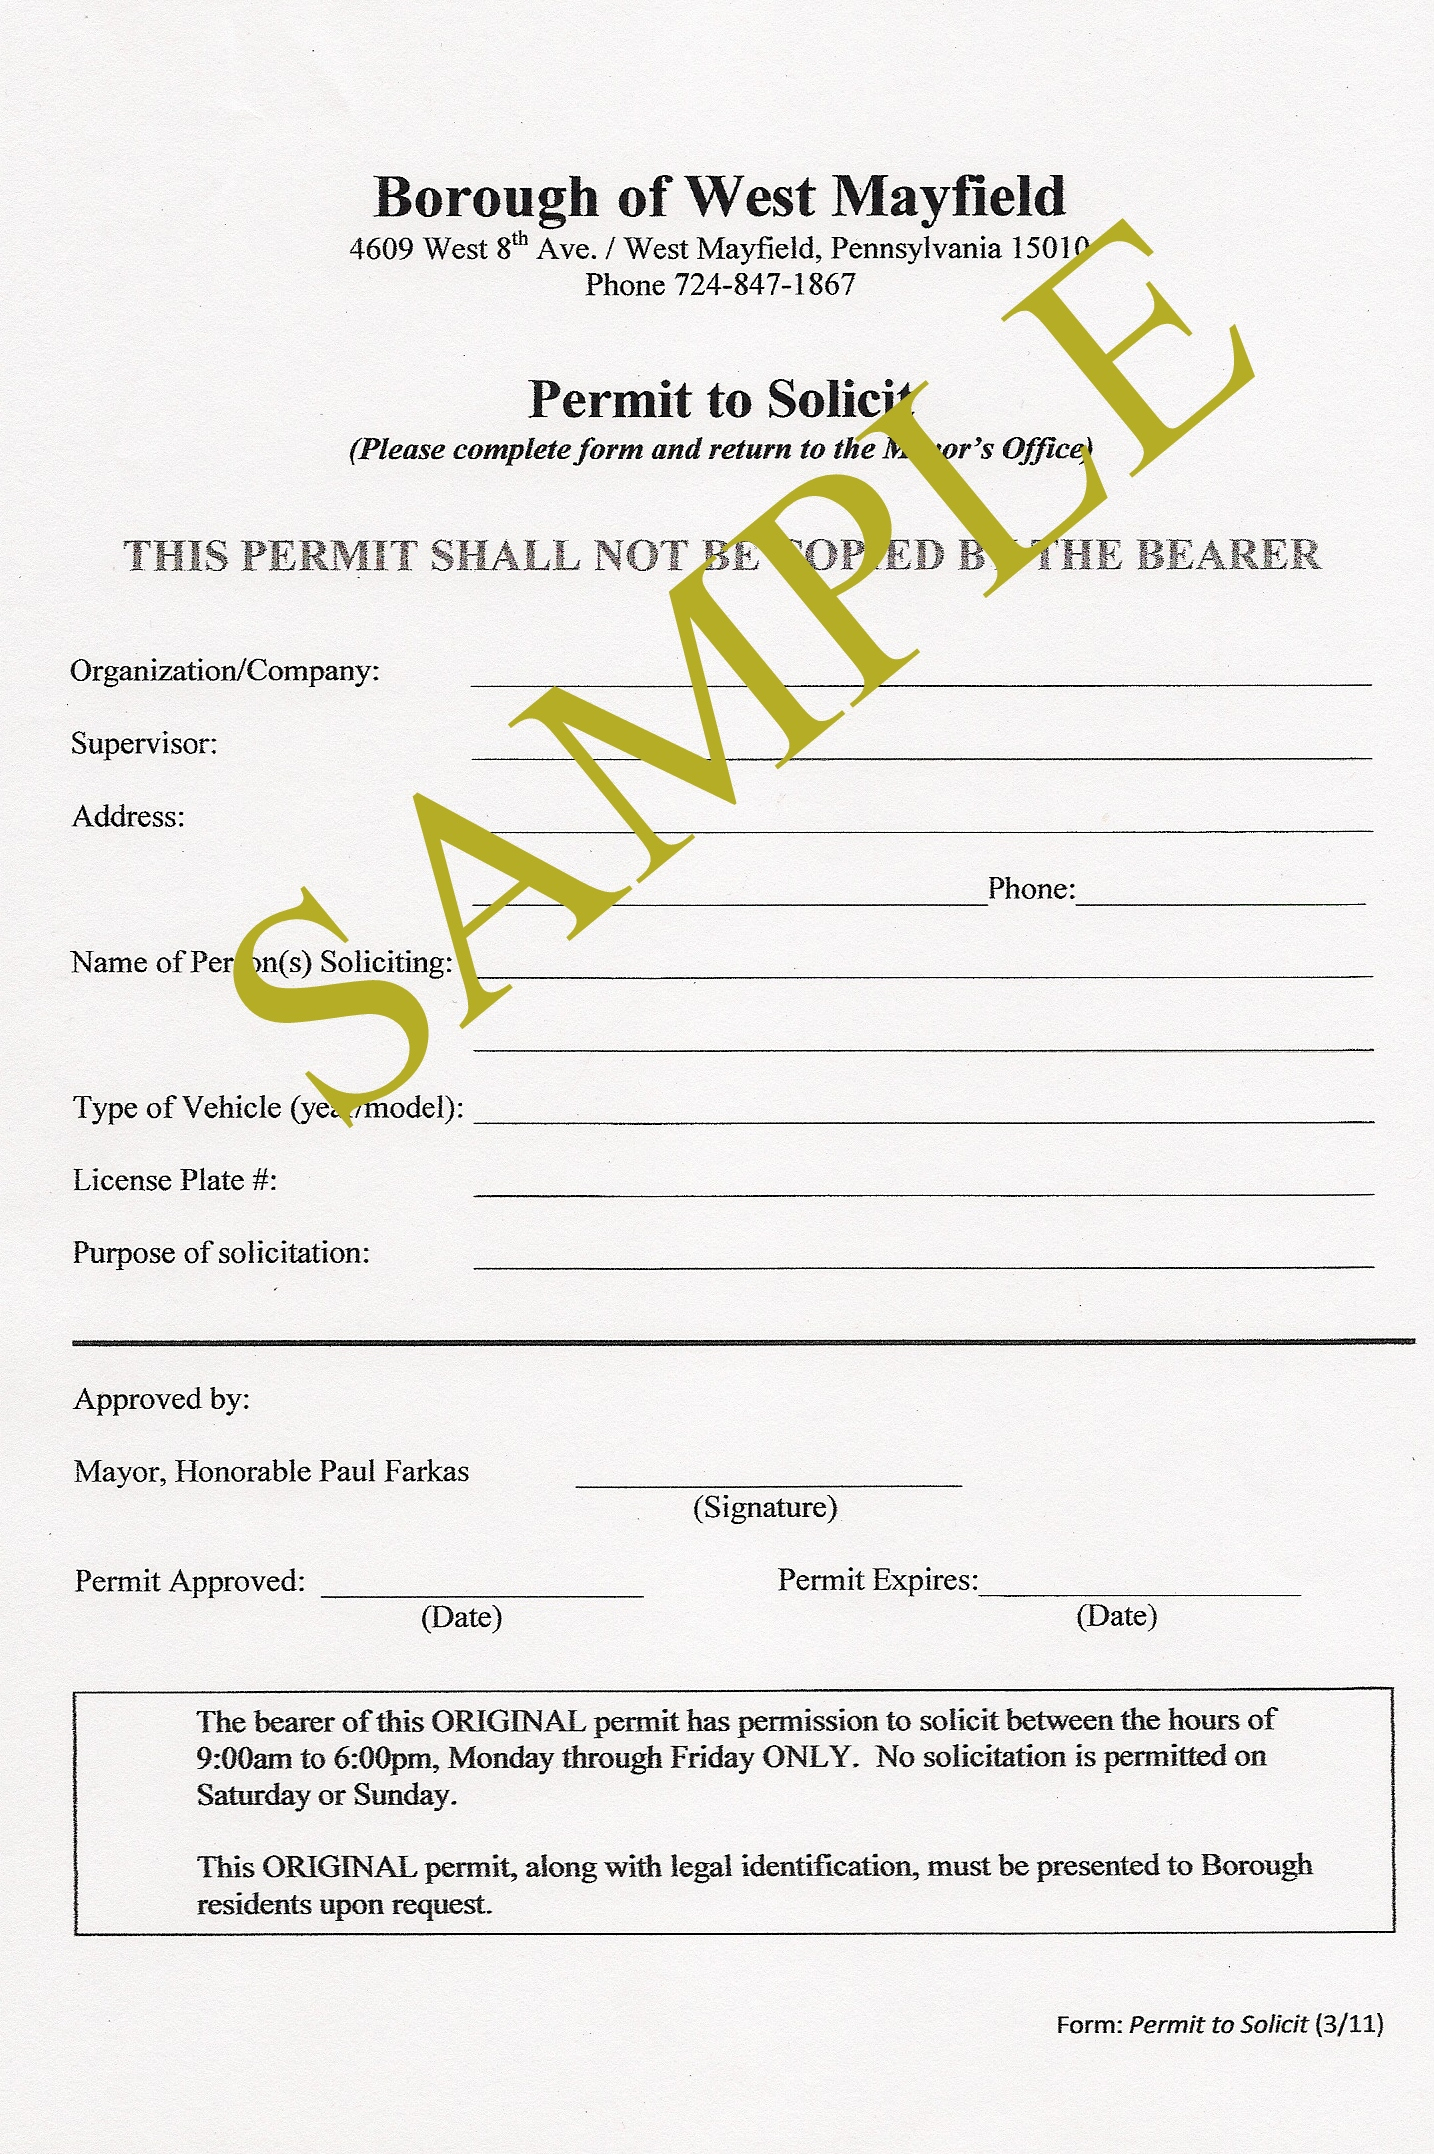 Business License Samples Expense Spreadshee business license samples.1434 x 2154